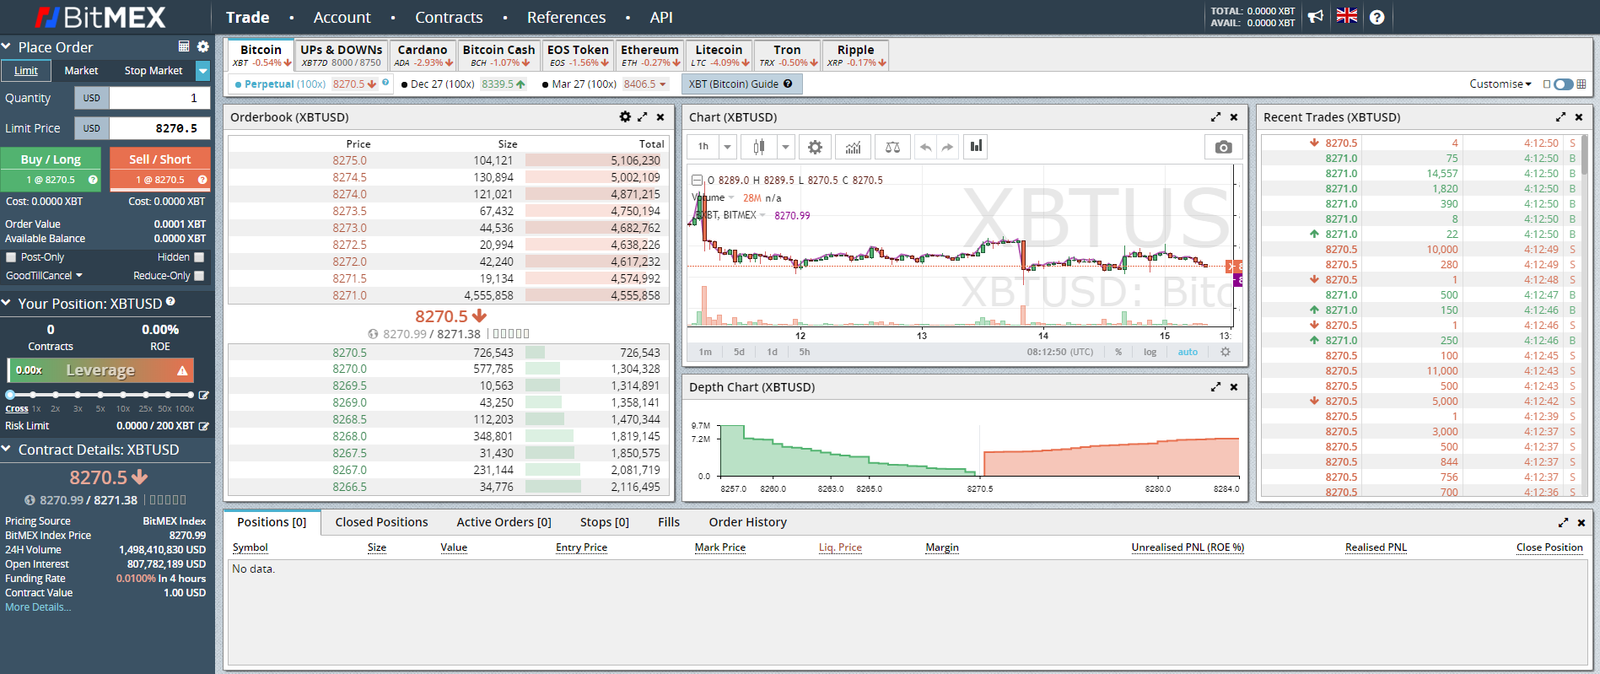 Bitmex trading user interface